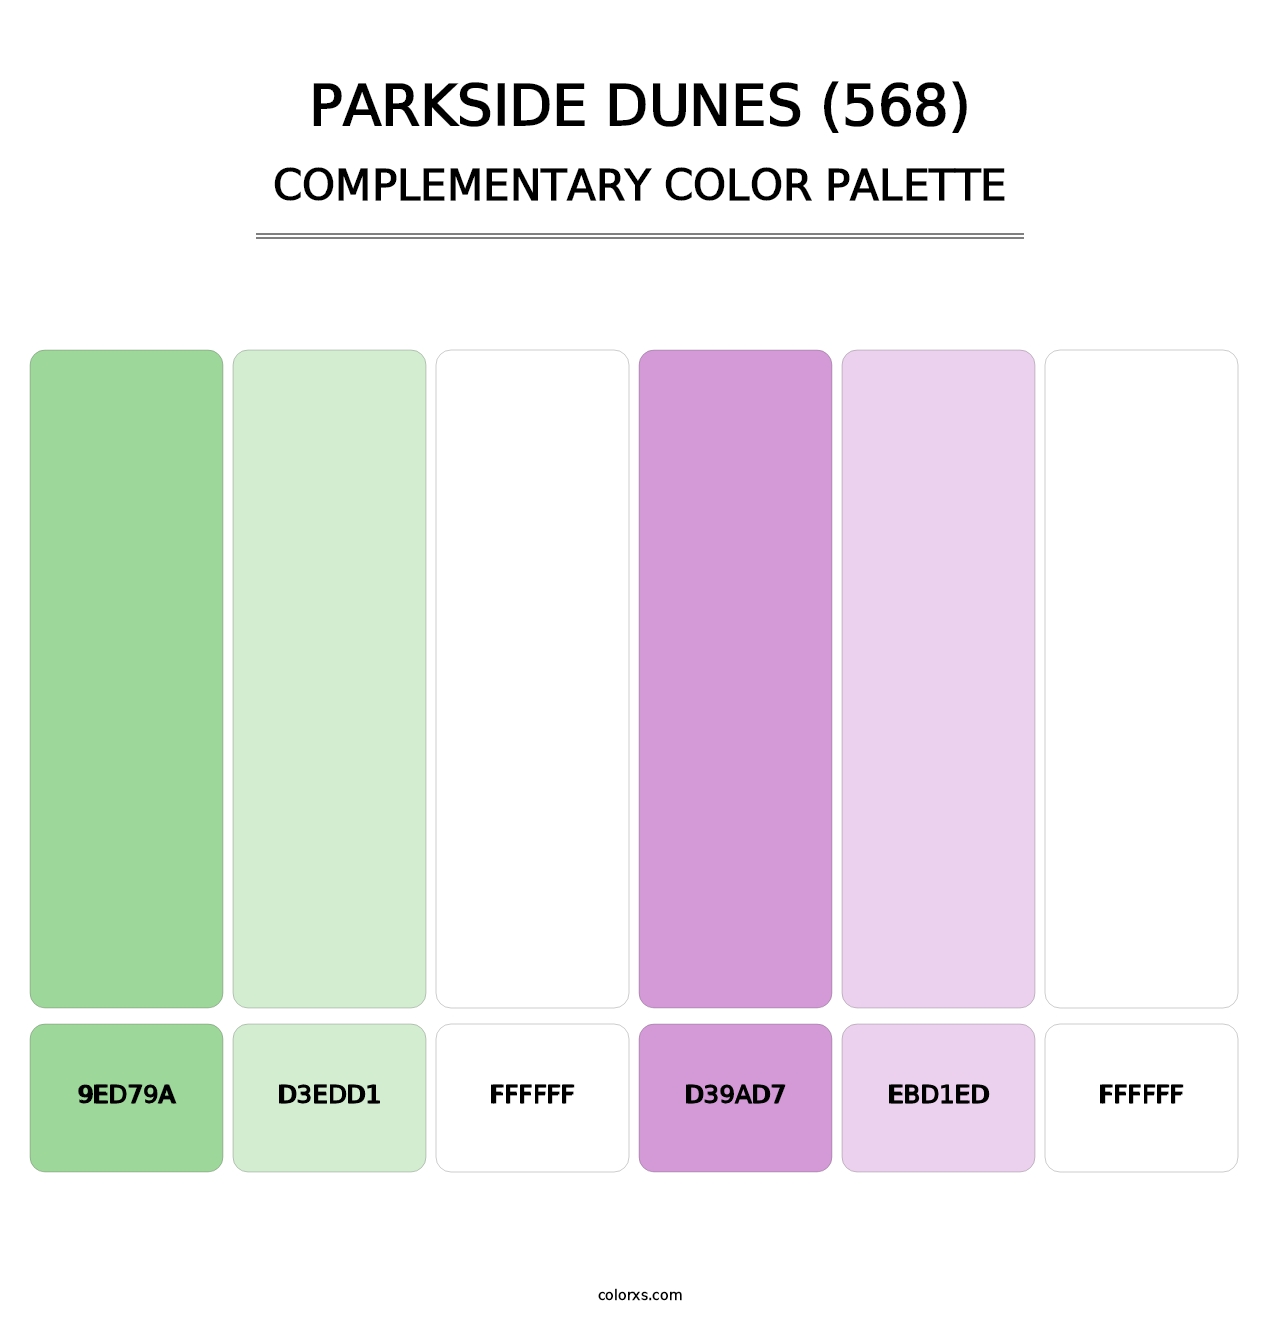 Parkside Dunes (568) - Complementary Color Palette